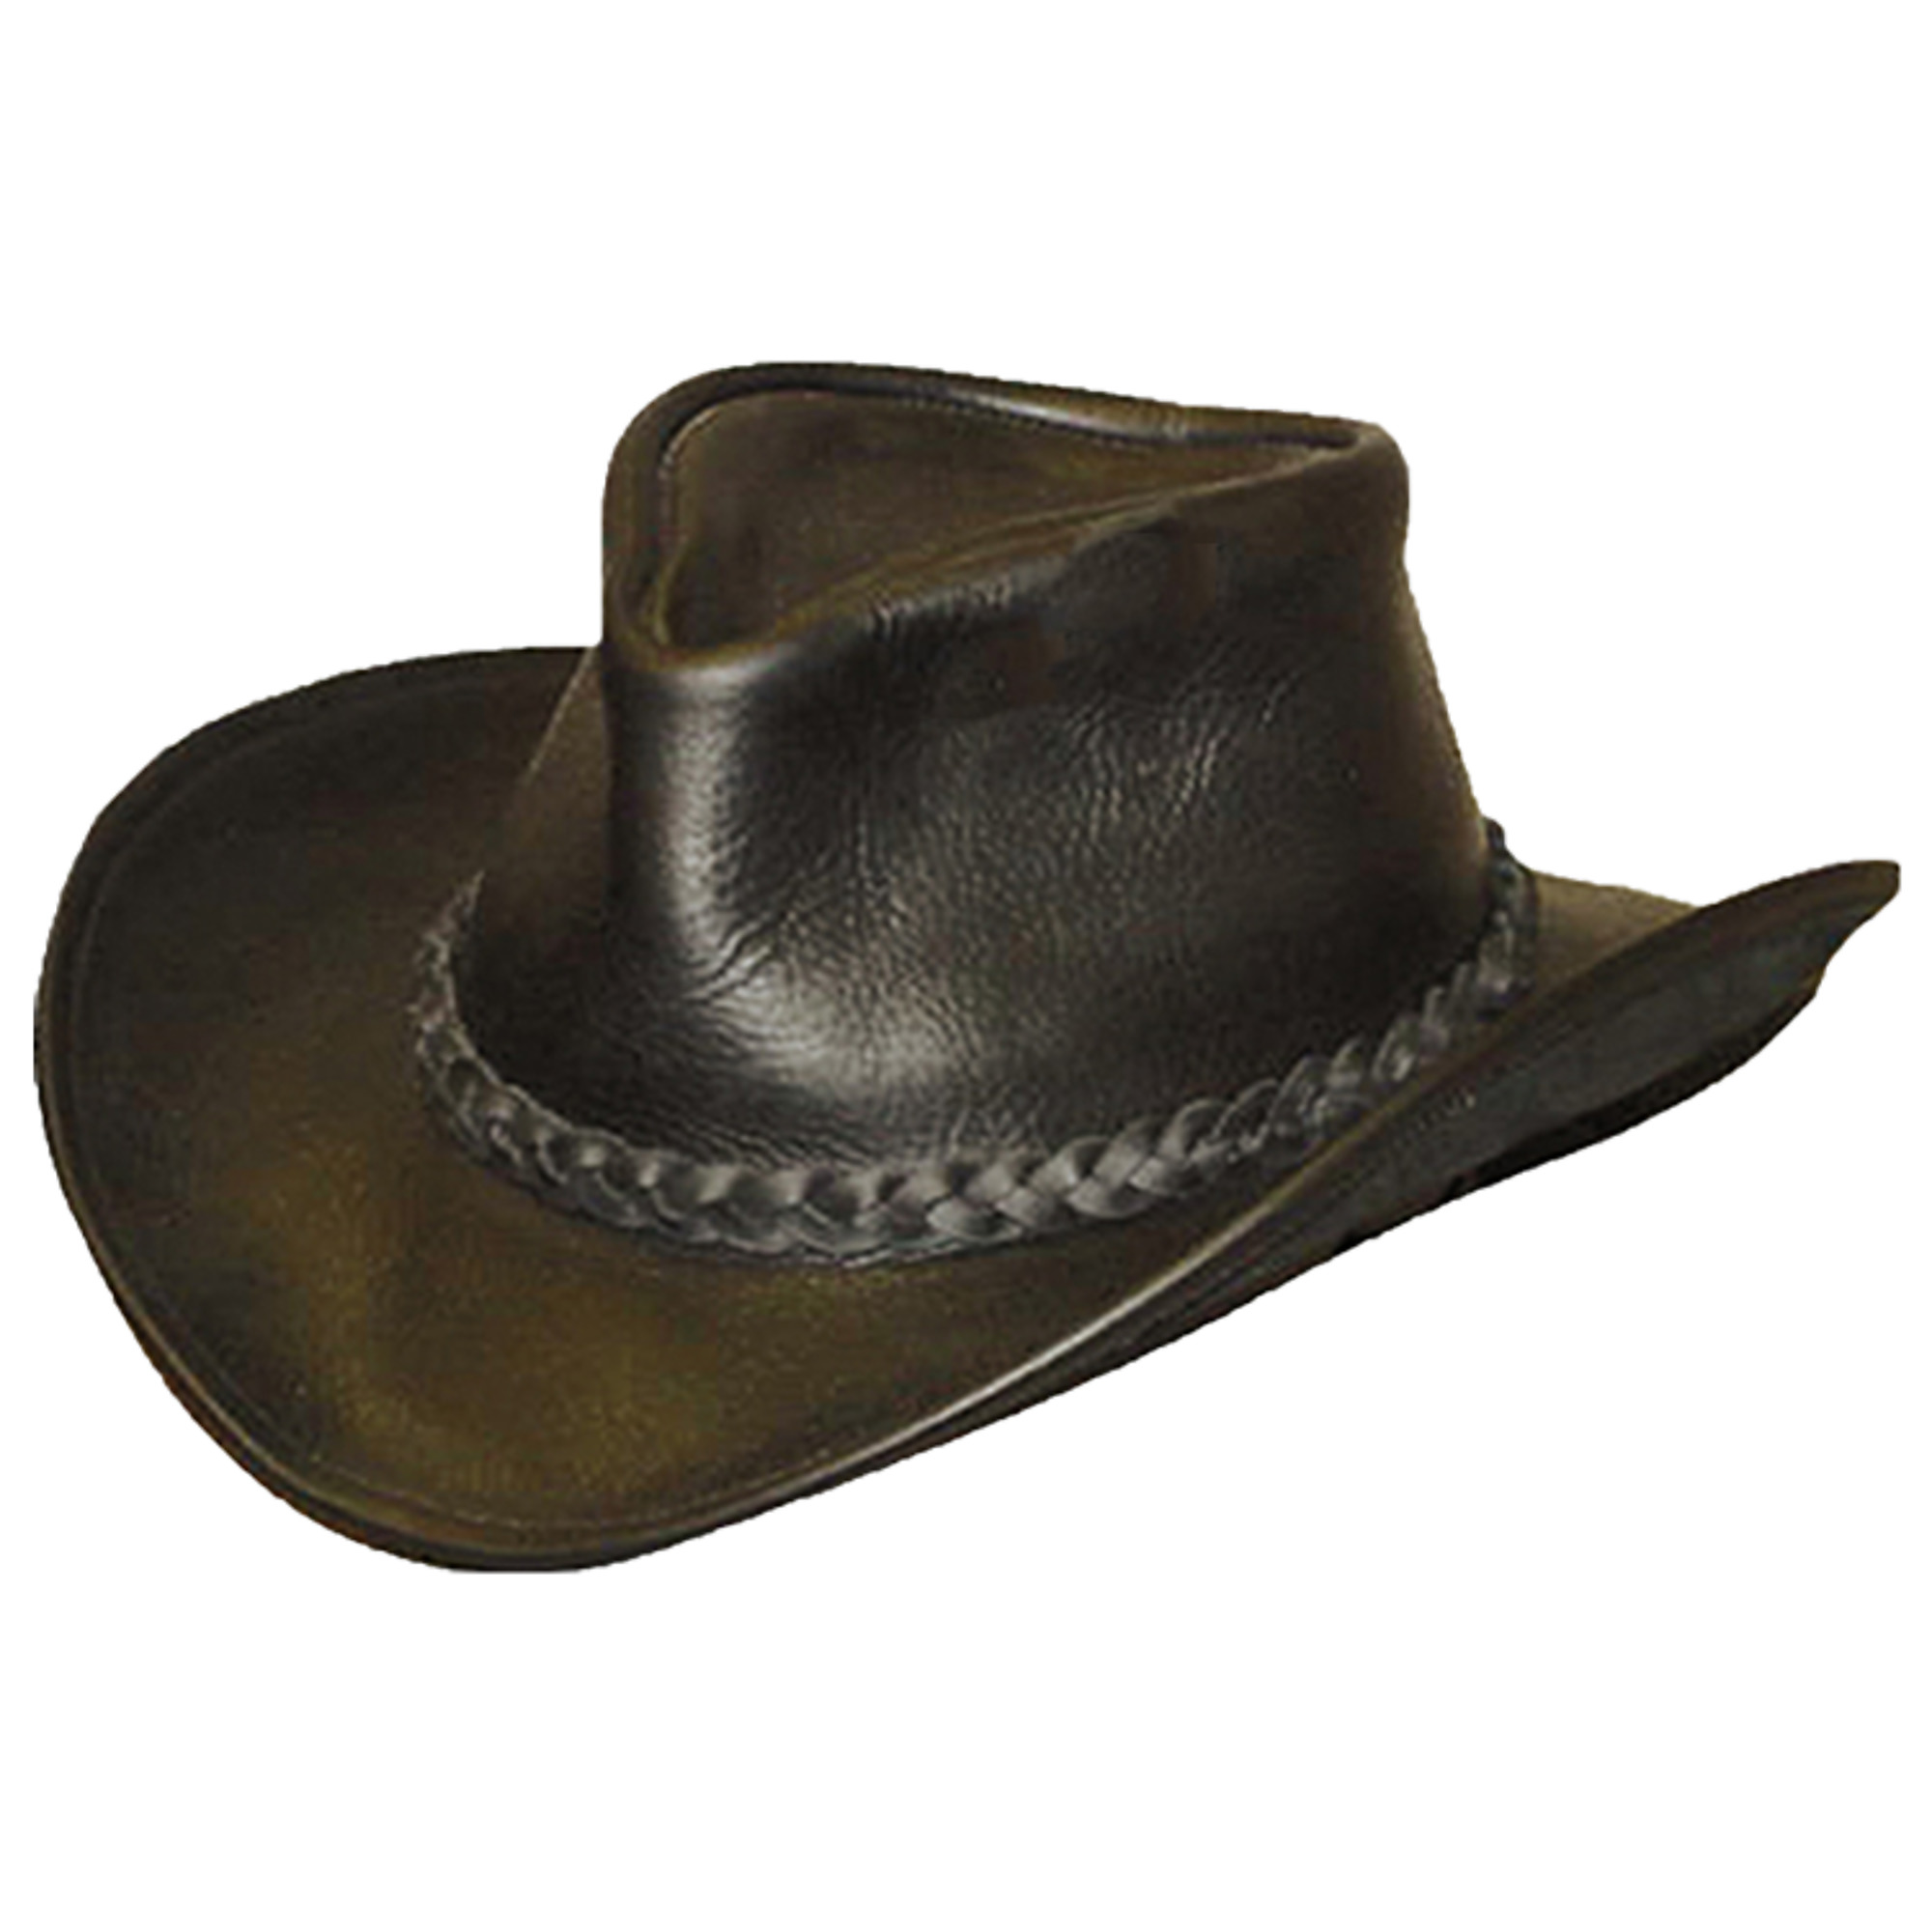 Henschel Hat Company, Coyote Hat, Leather, Size XL, Color Black, Hat Style Hat, Model 1101-39-XL